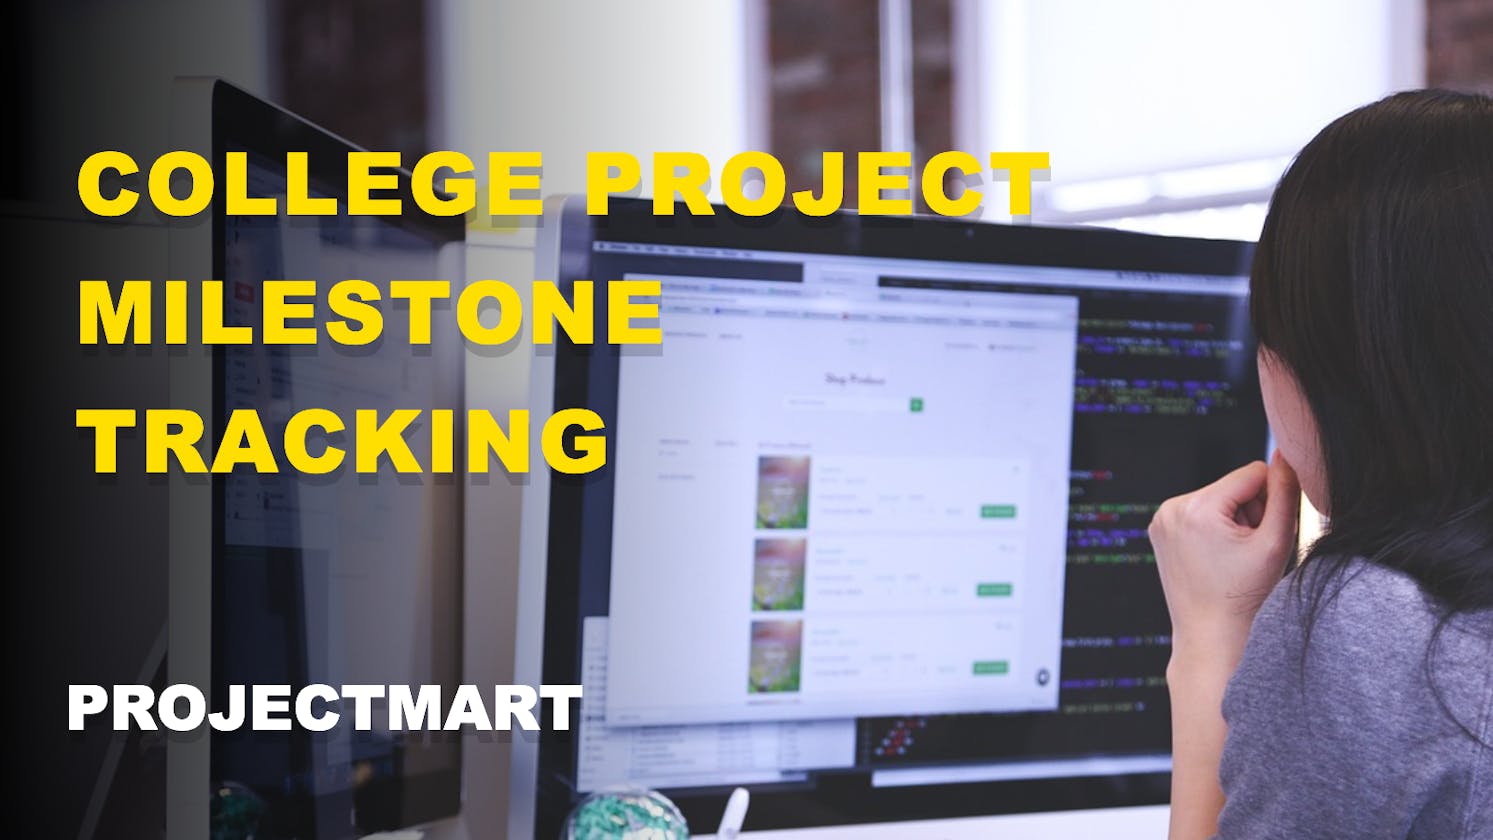 College Project Milestone Tracking